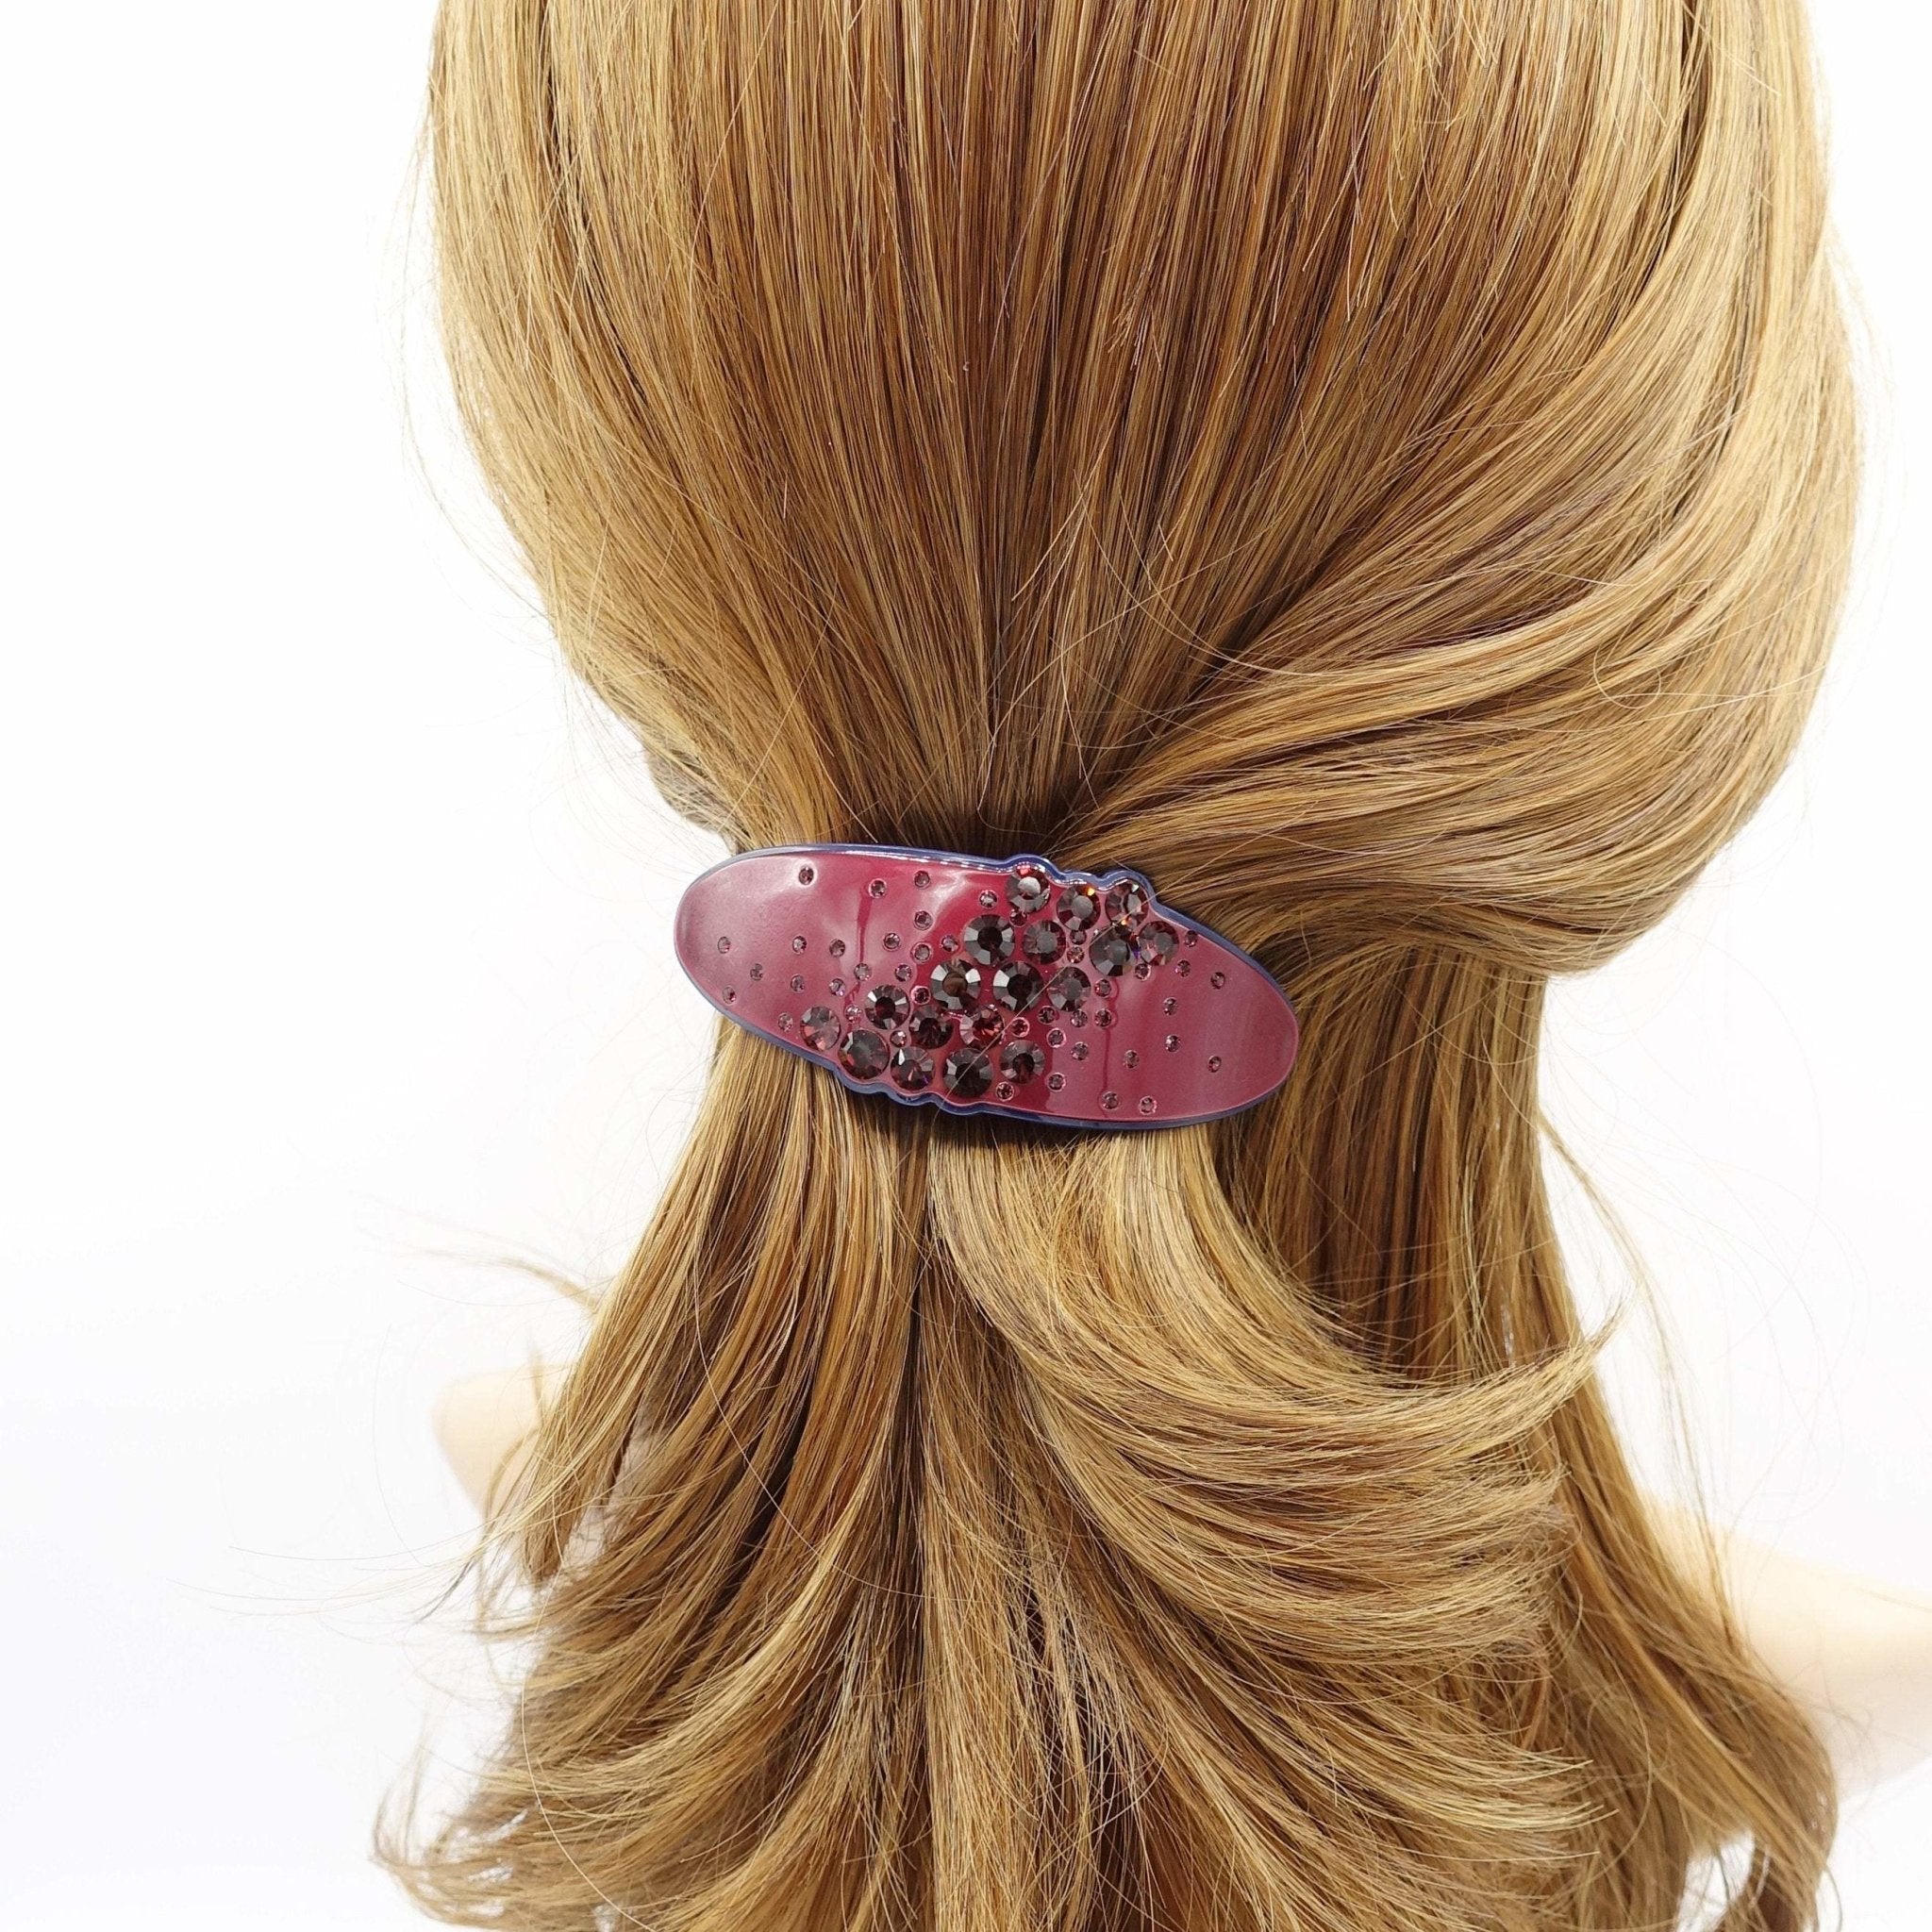 VeryShine claw/banana/barrette Red wine galaxy rhinestone embellished cellulose acetate hair barrette women hair accessory